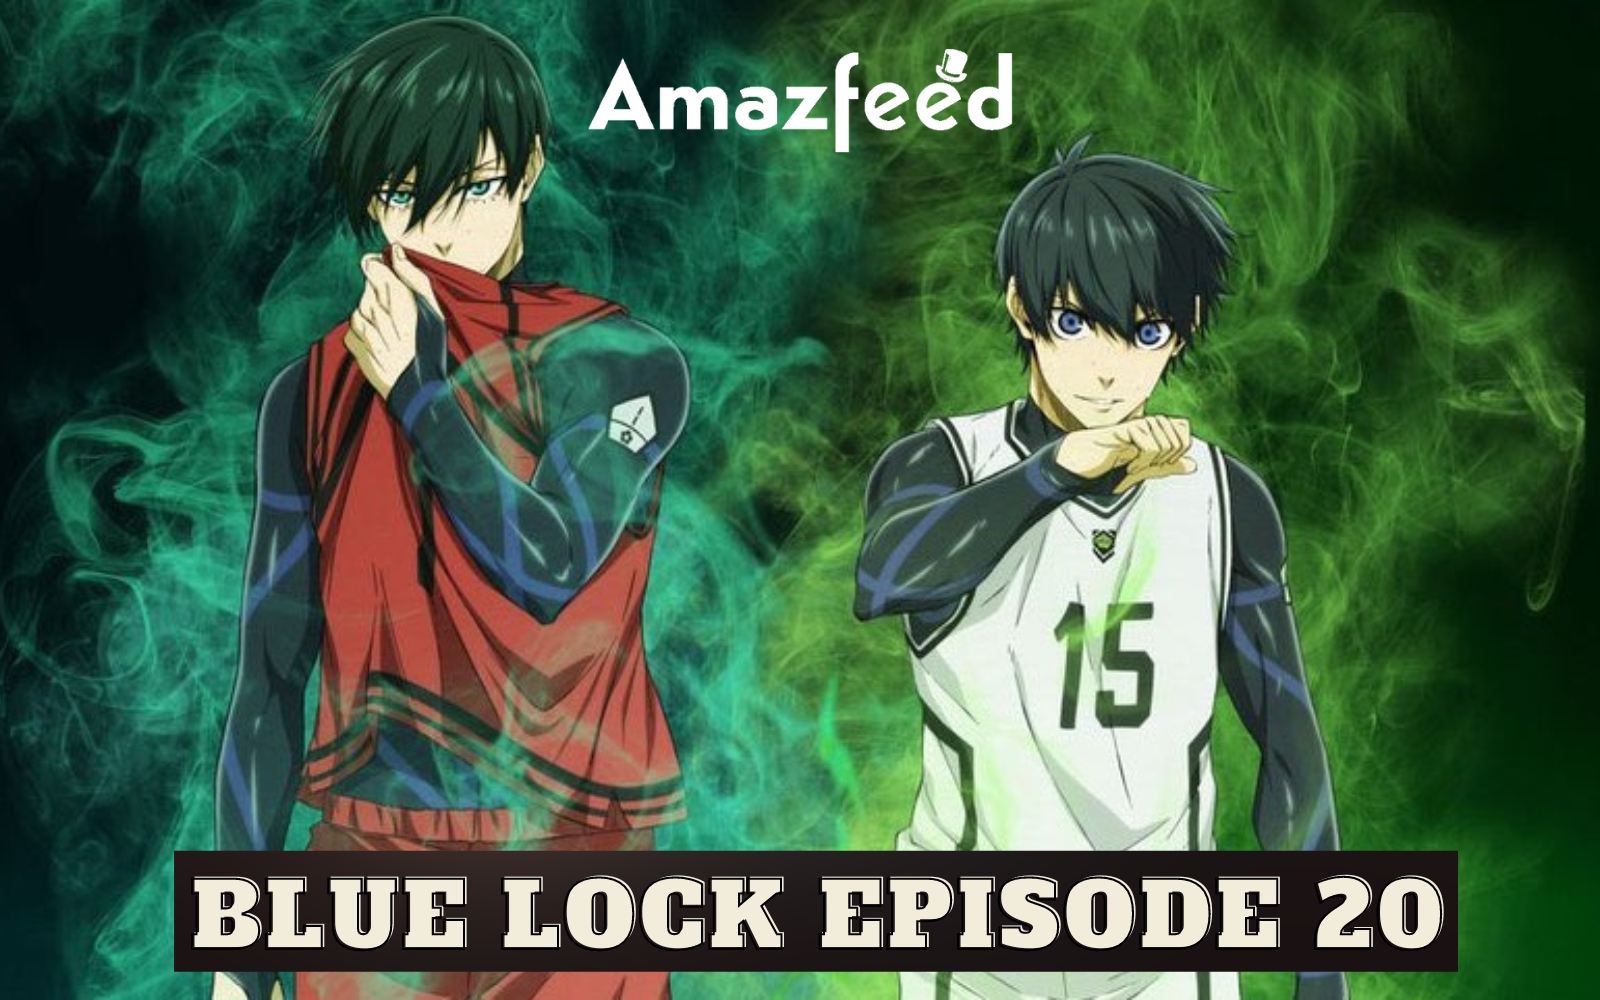 Blue Lock Episode 23 Preview Images Revealed - Anime Corner